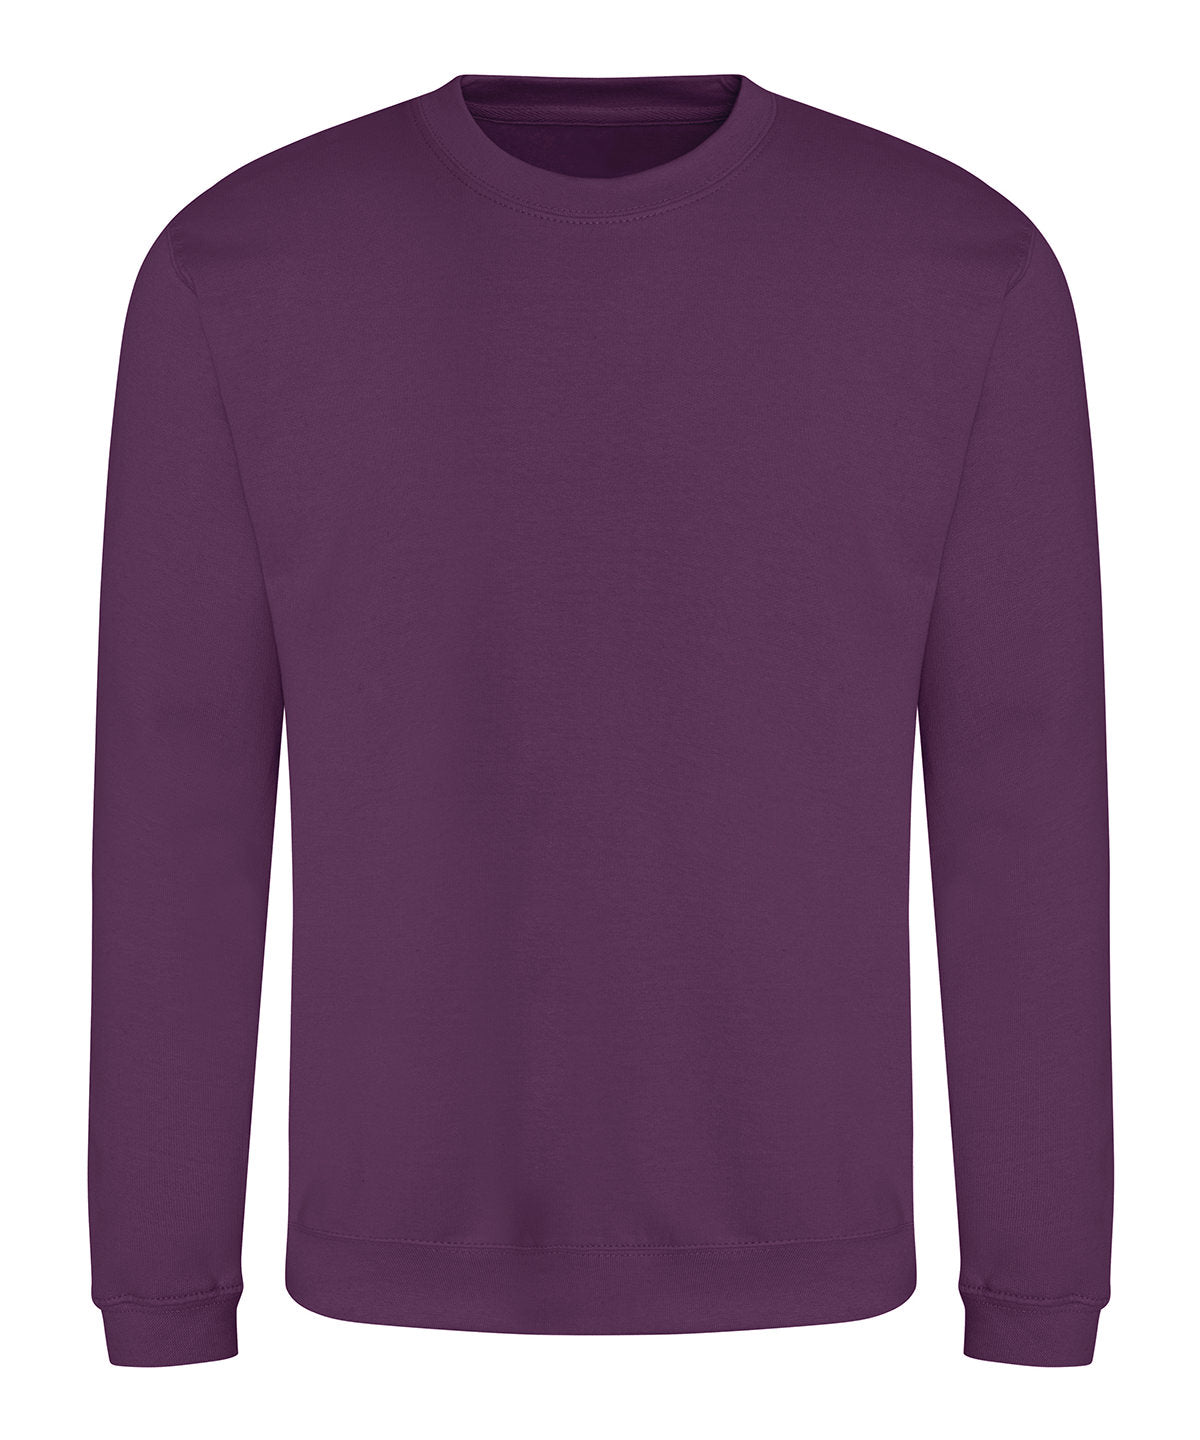 Personalised Sweatshirts - Light Purple AWDis Just Hoods AWDis sweatshirt